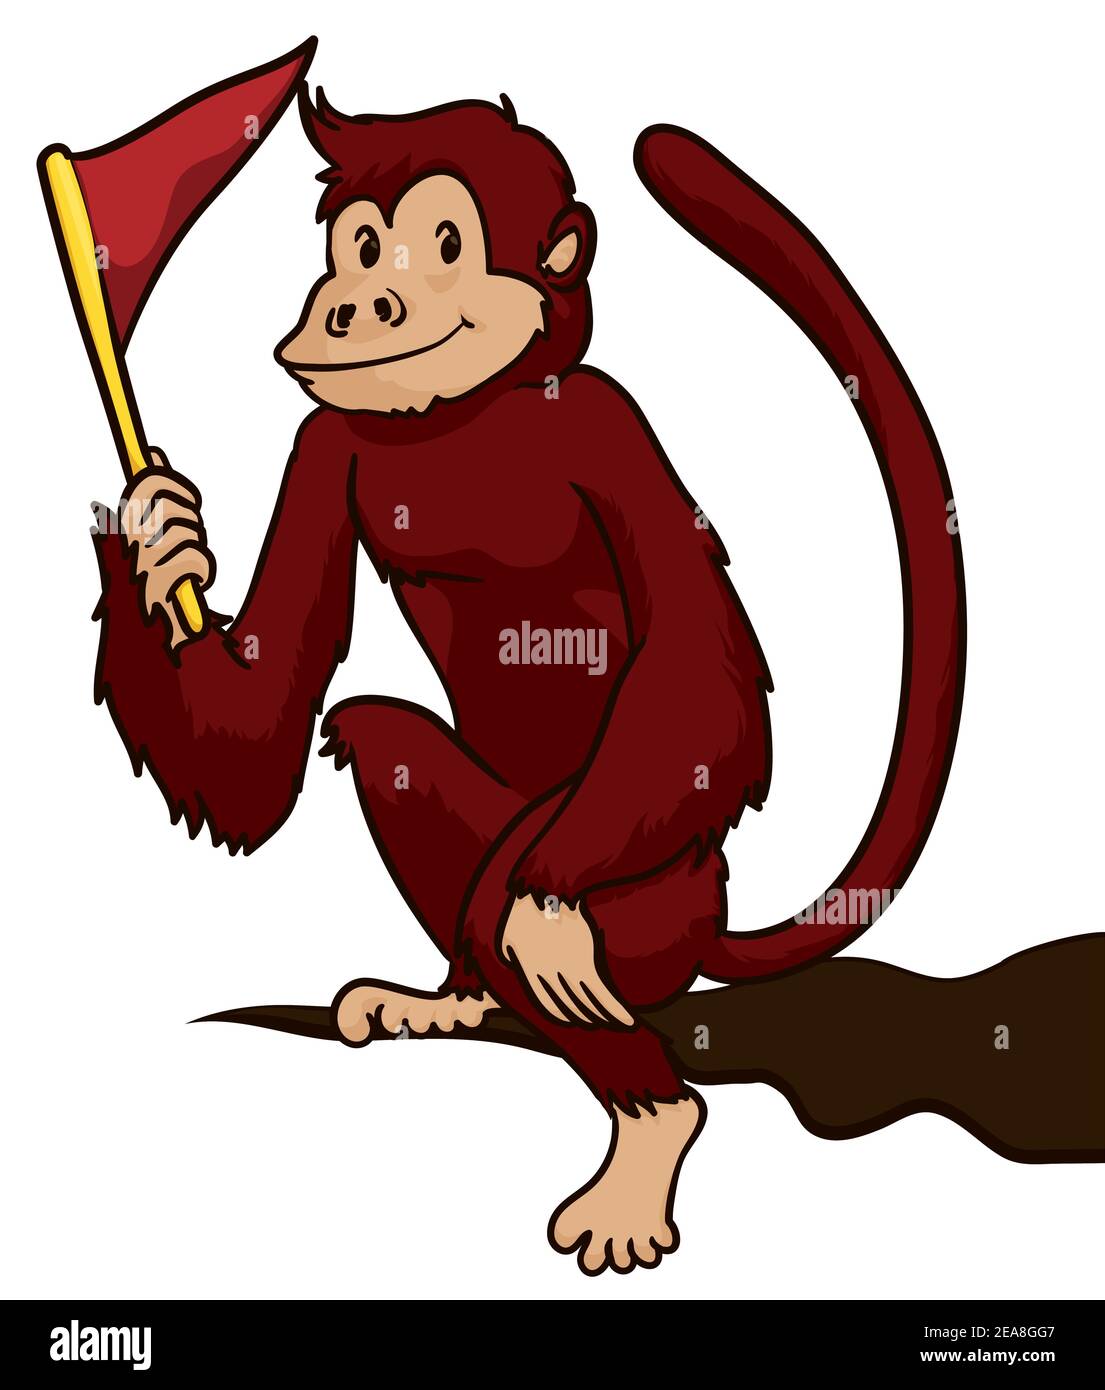 Mono en un palo fotografías e imágenes de alta resolución - Alamy